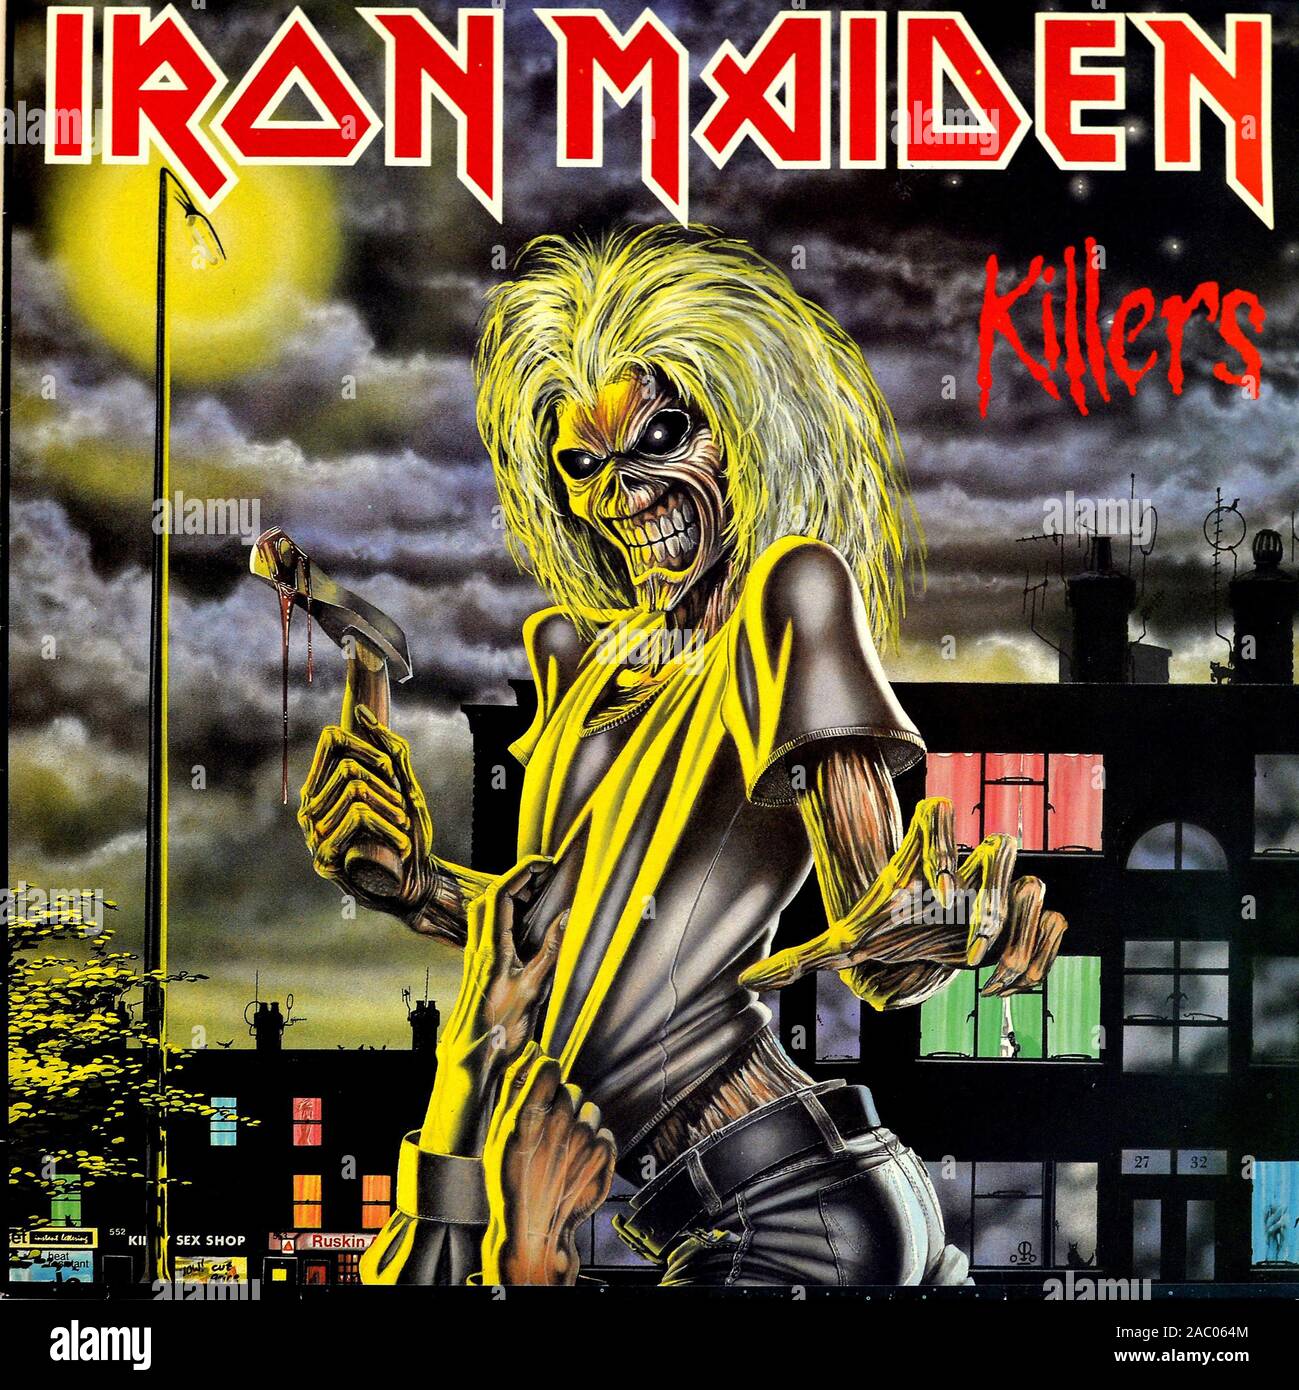 Iron Maiden Killers - Vintage vinile copertina album Foto stock - Alamy